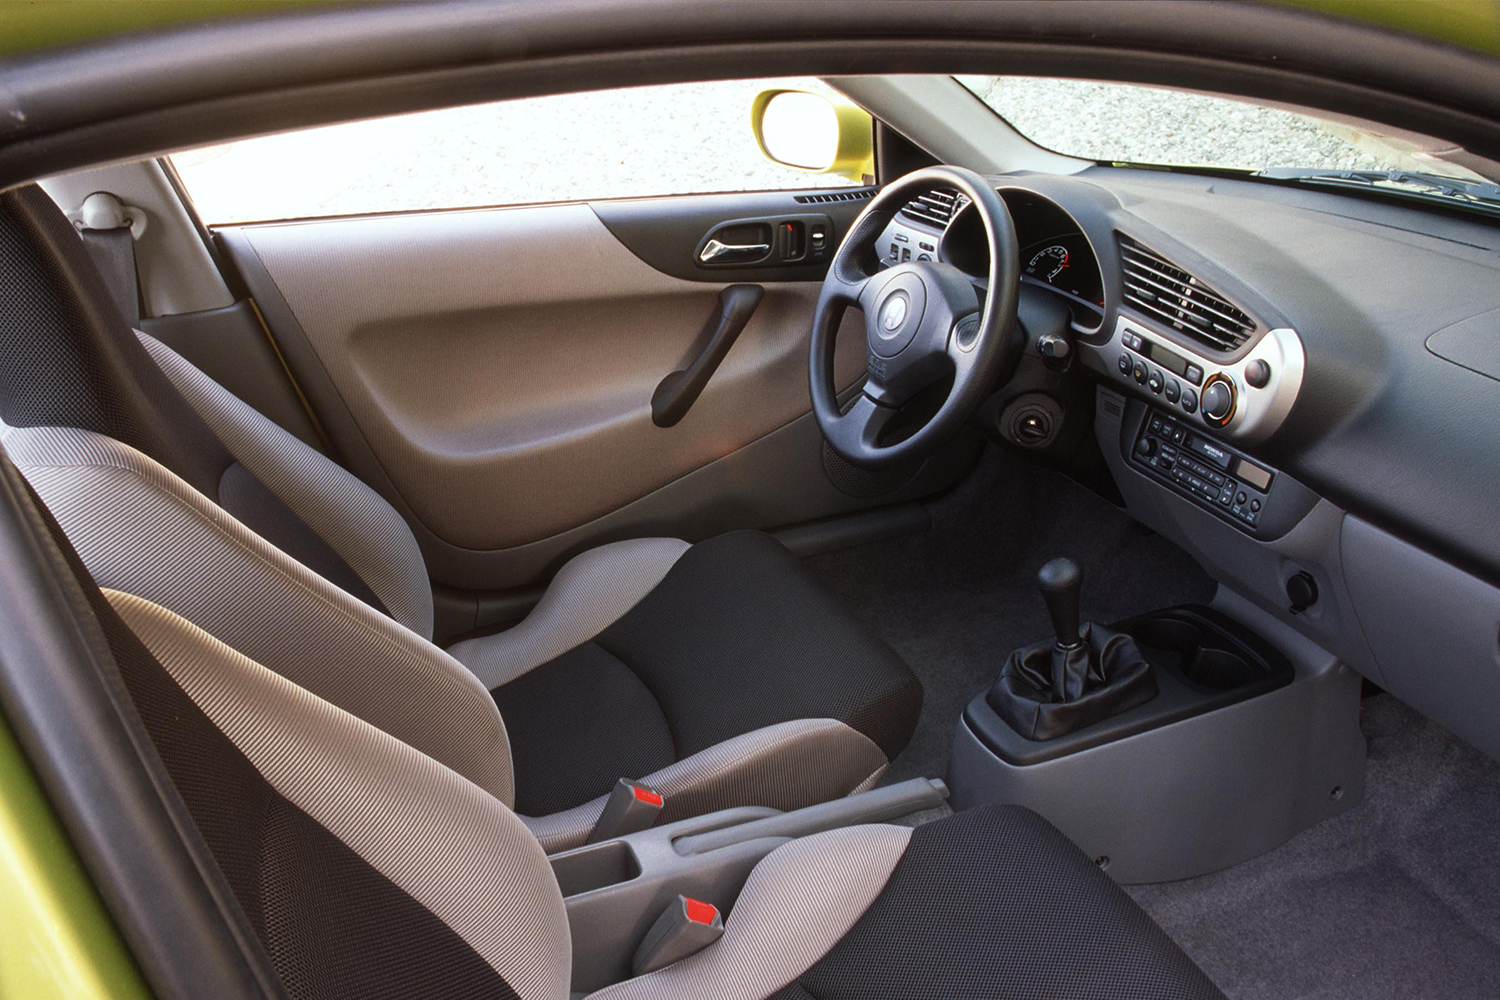 The interior of a 2000 Honda Insight hybrid